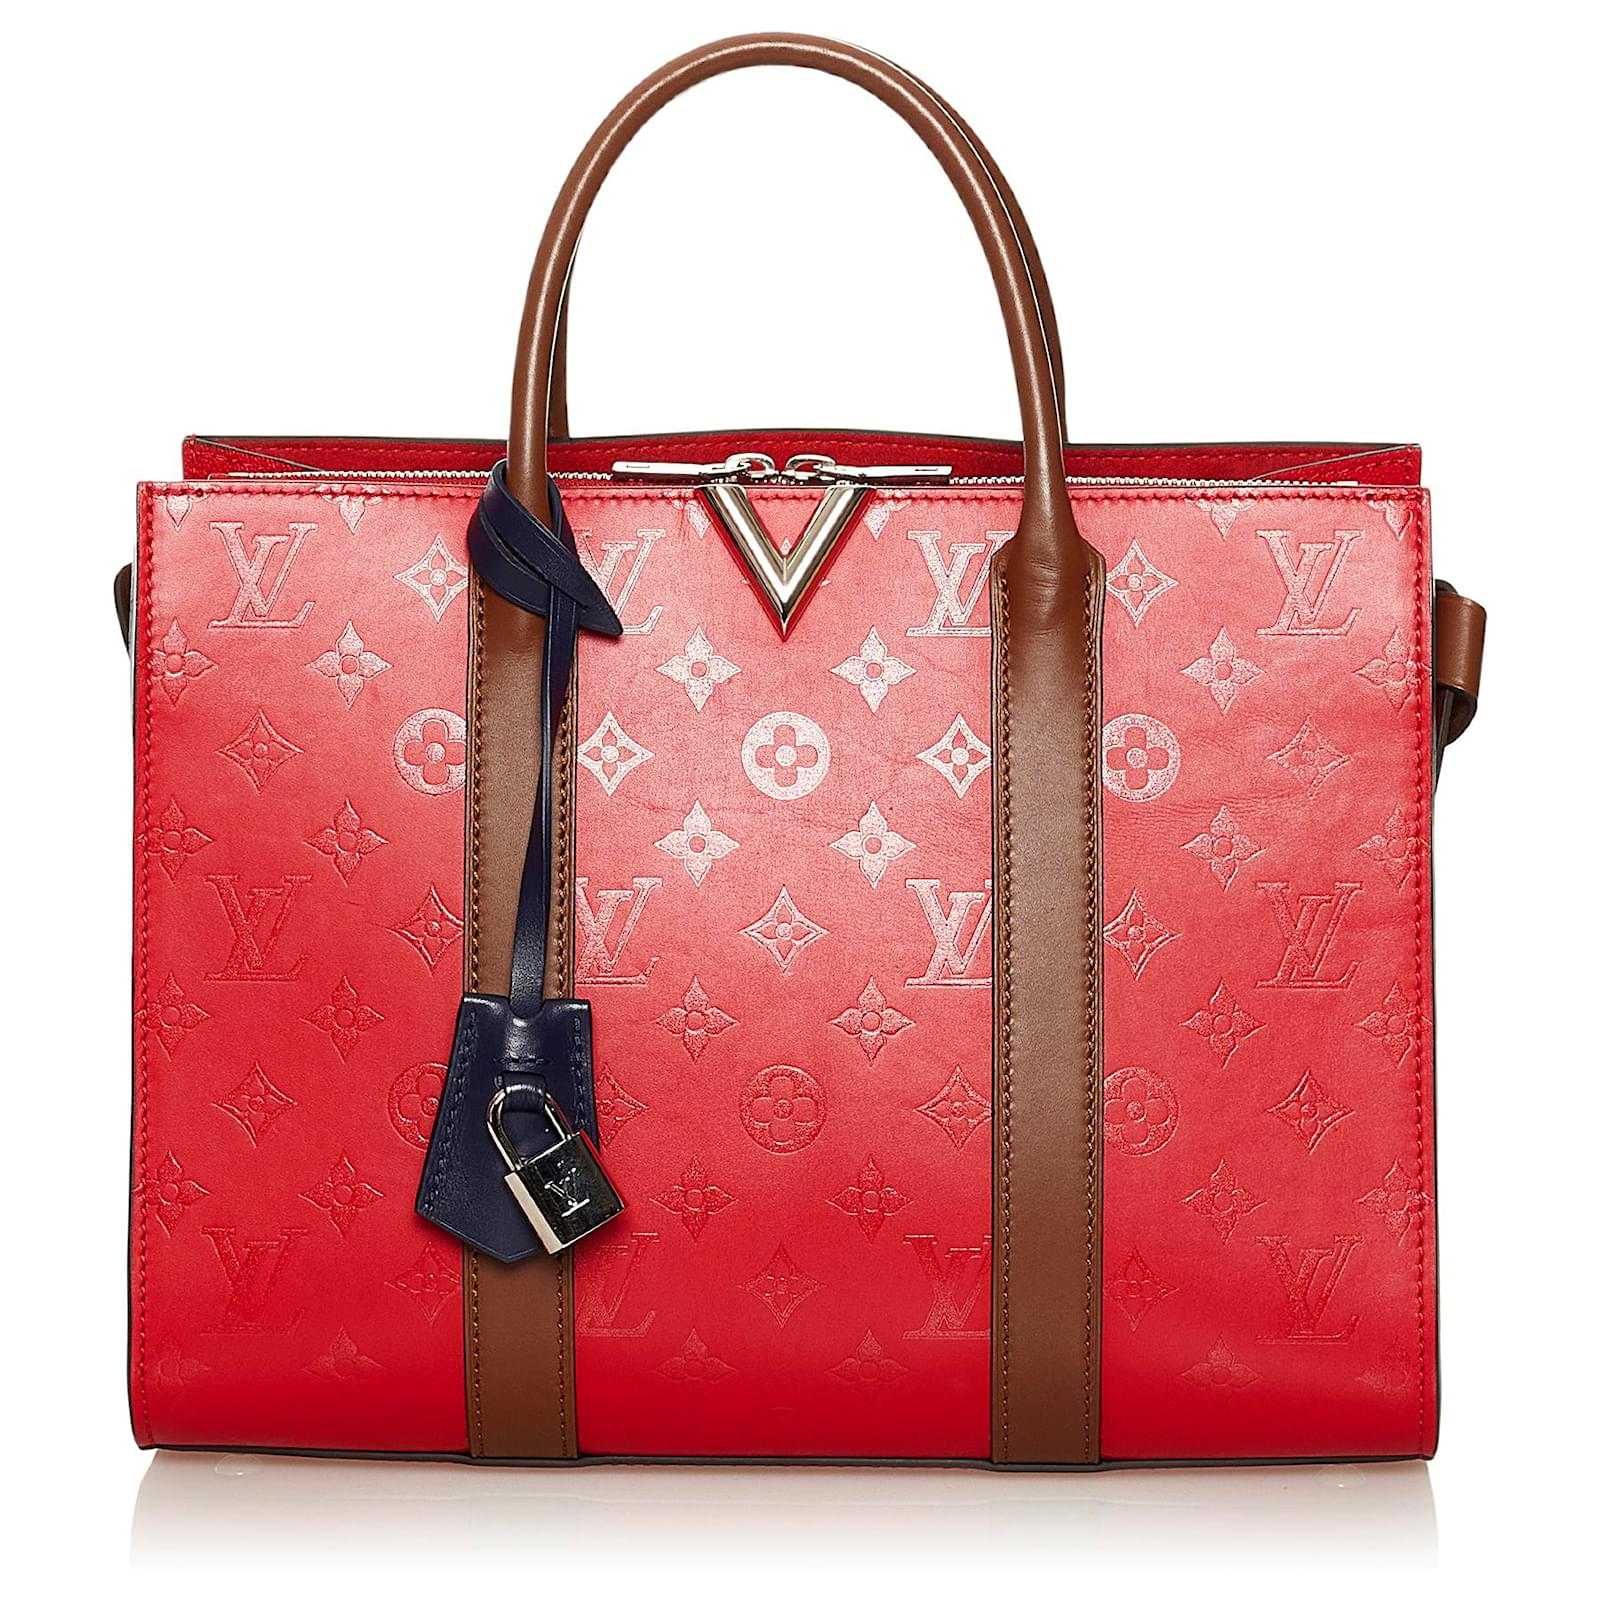 louis-vuitton red handbags